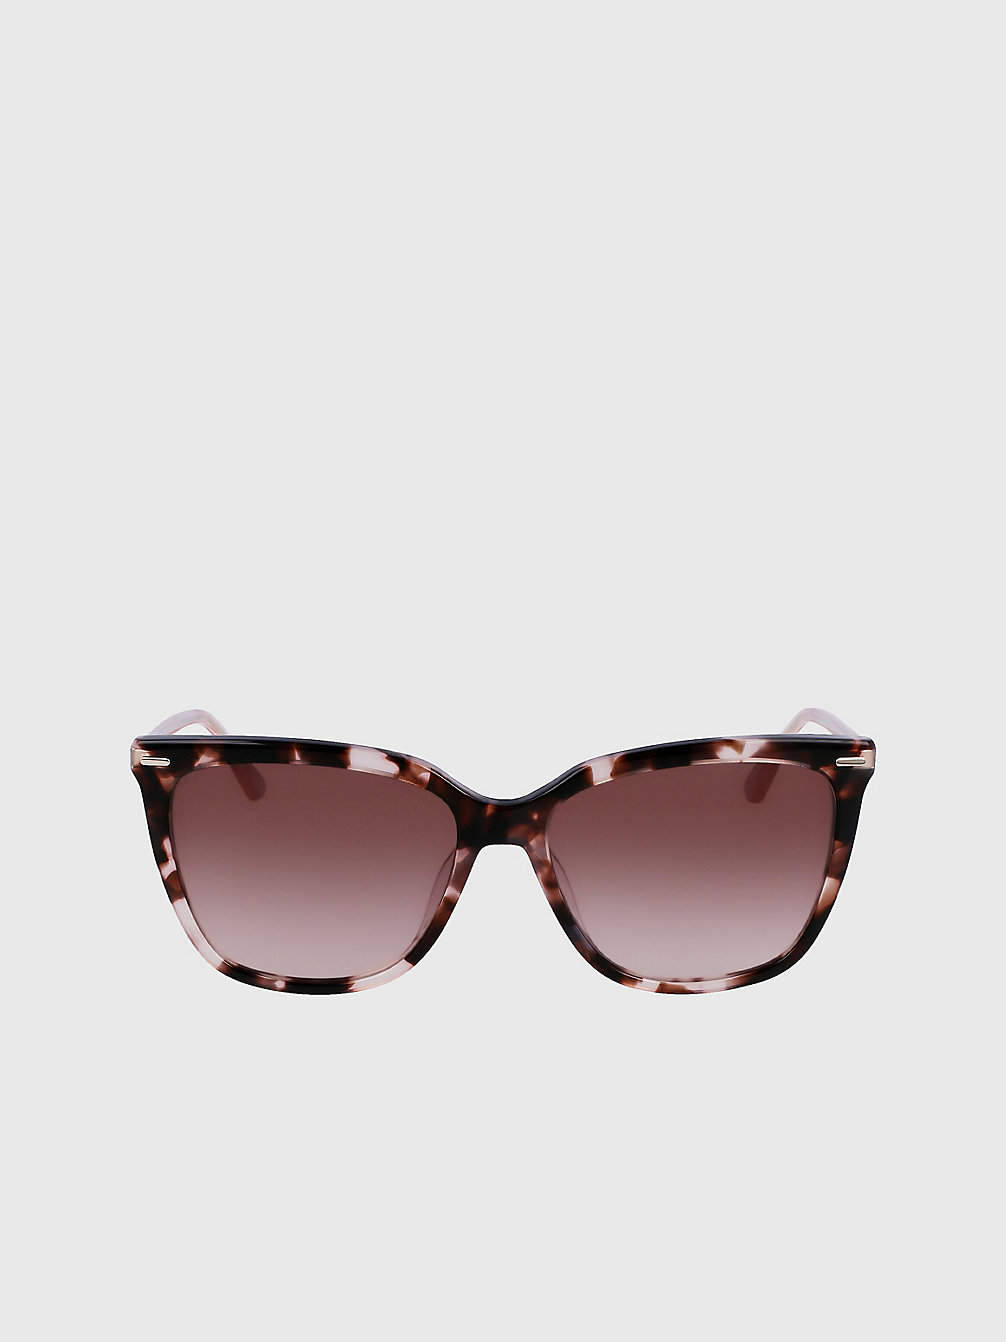 ROSE TORTOISE > Прямоугольные солнцезащитные очки Ck22532s > undefined Женщины - Calvin Klein